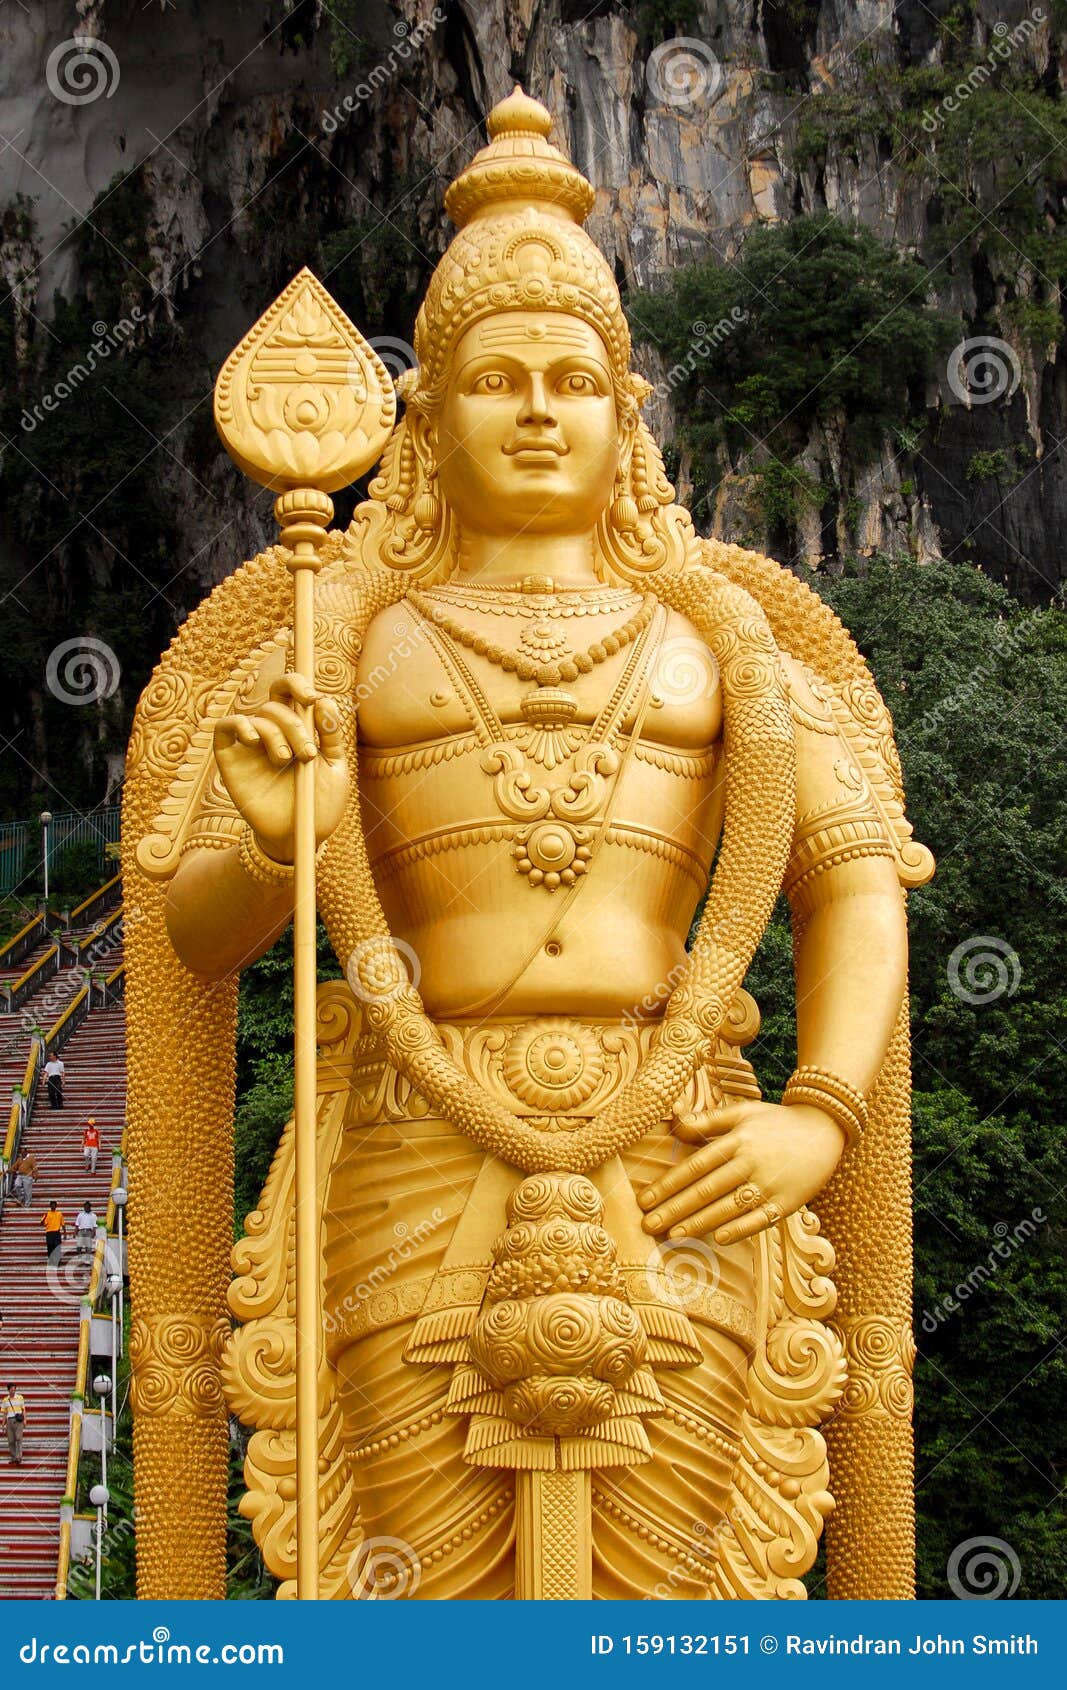 Lord Murugan Statue stock image. Image of distinguishing - 159132151